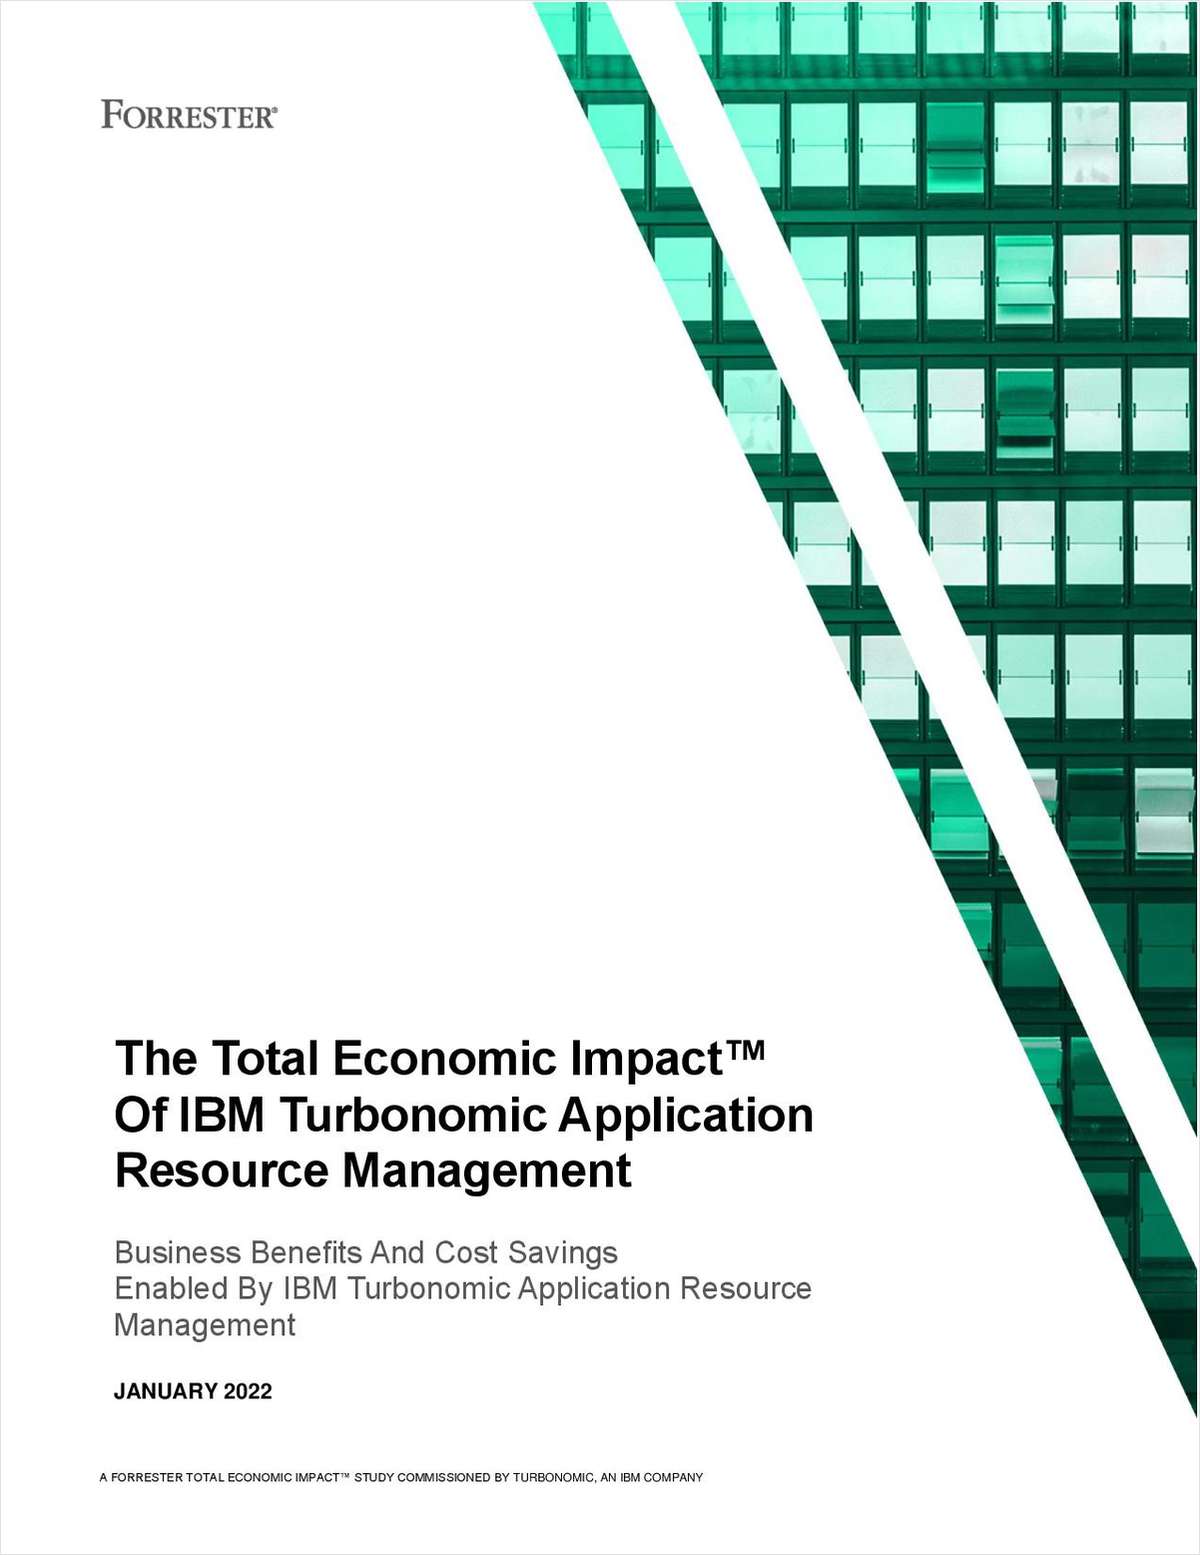 Economic Impact of IBM Turbonomic Application Resource Management